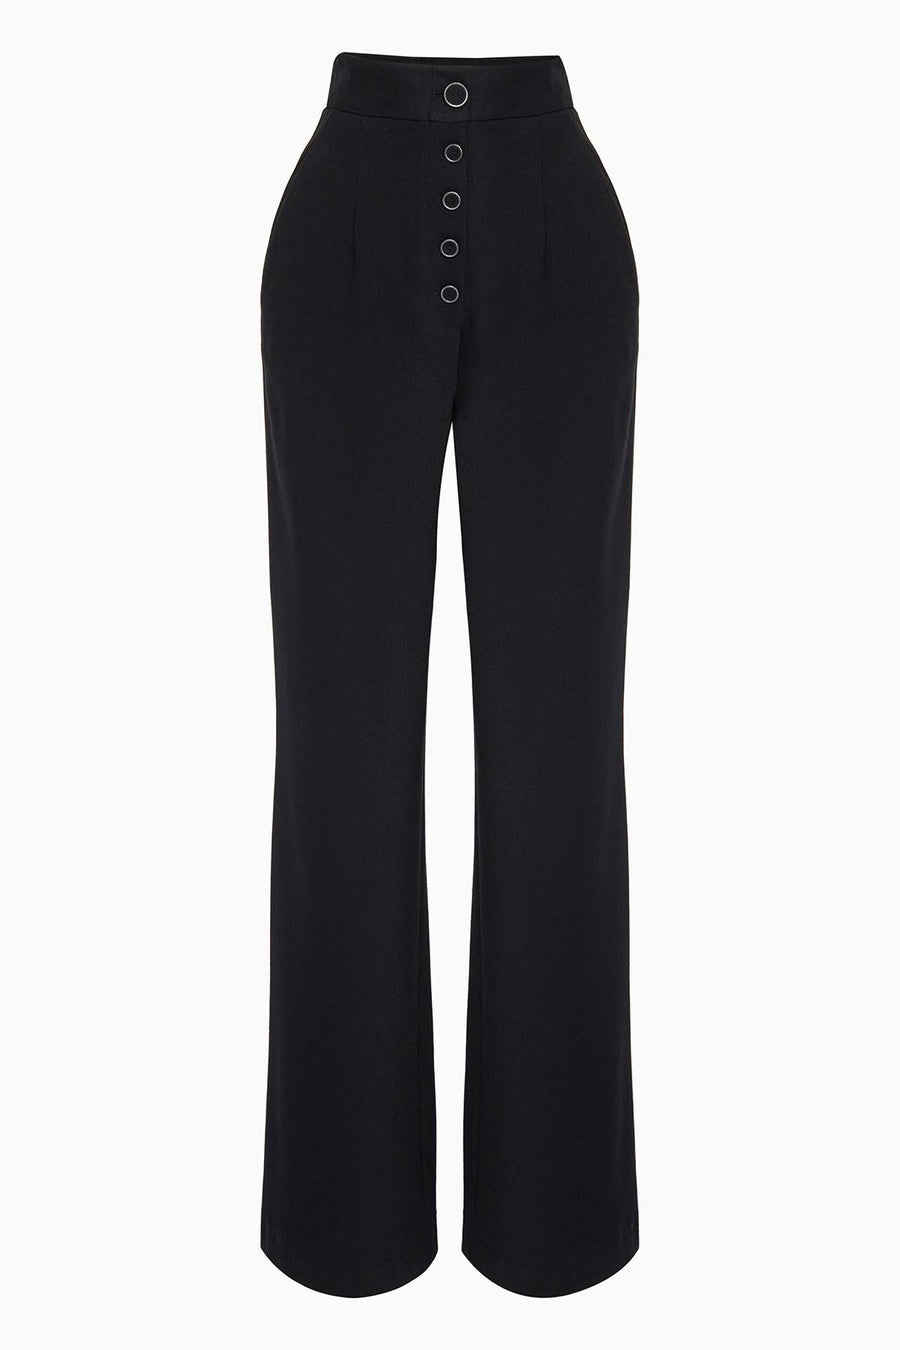 Black High Waist Pants With Button Detail | Porterist